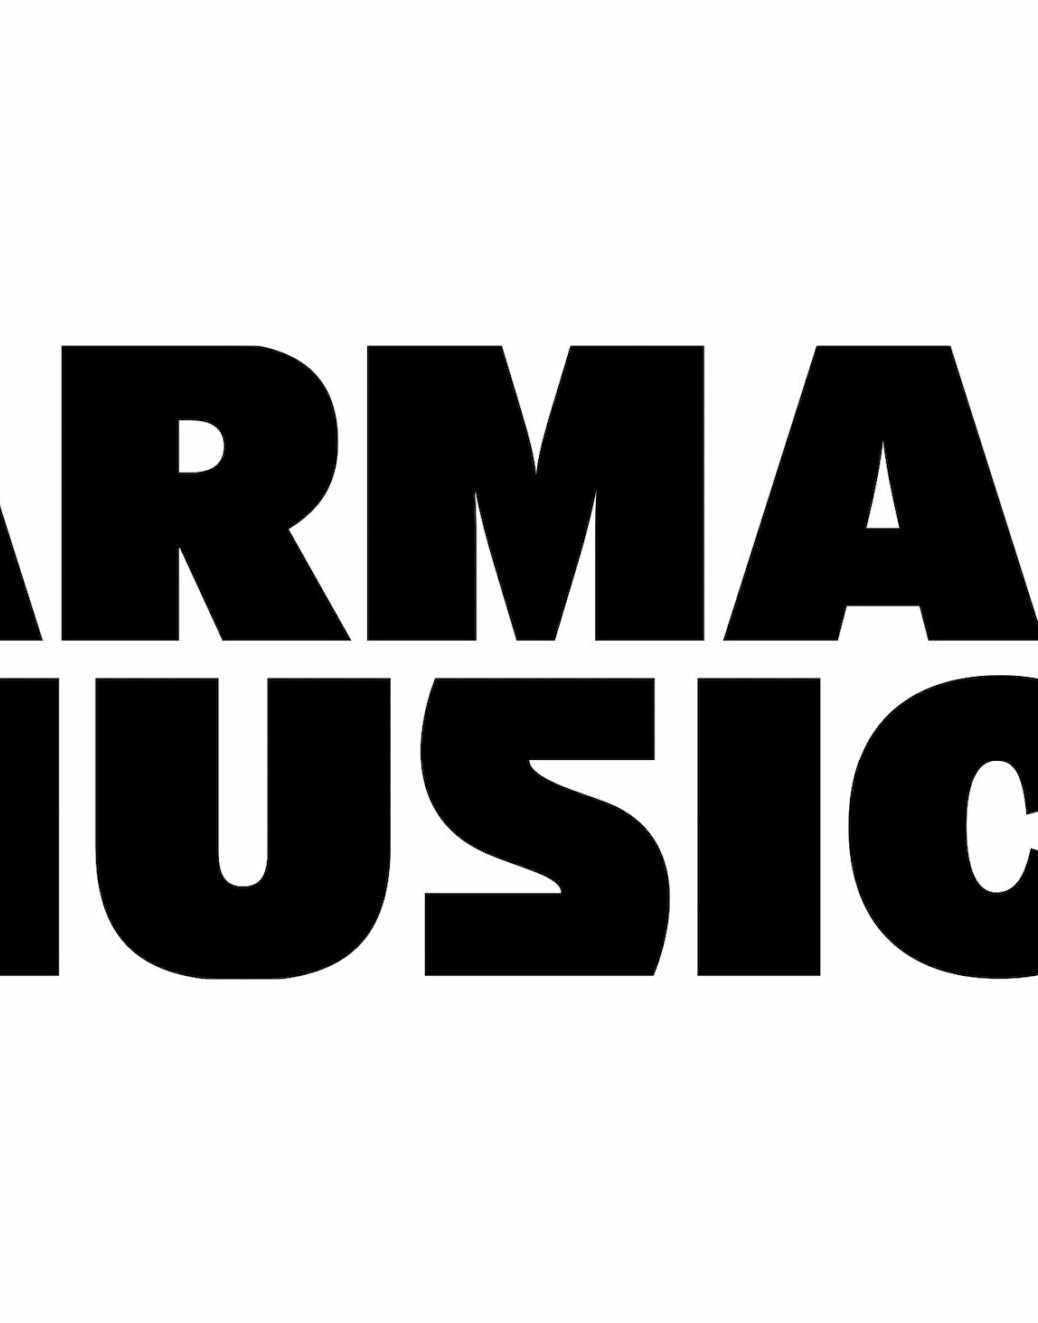 Armada Music – General Manager USA (US) – Music Business Worldwide – Music Business Worldwide